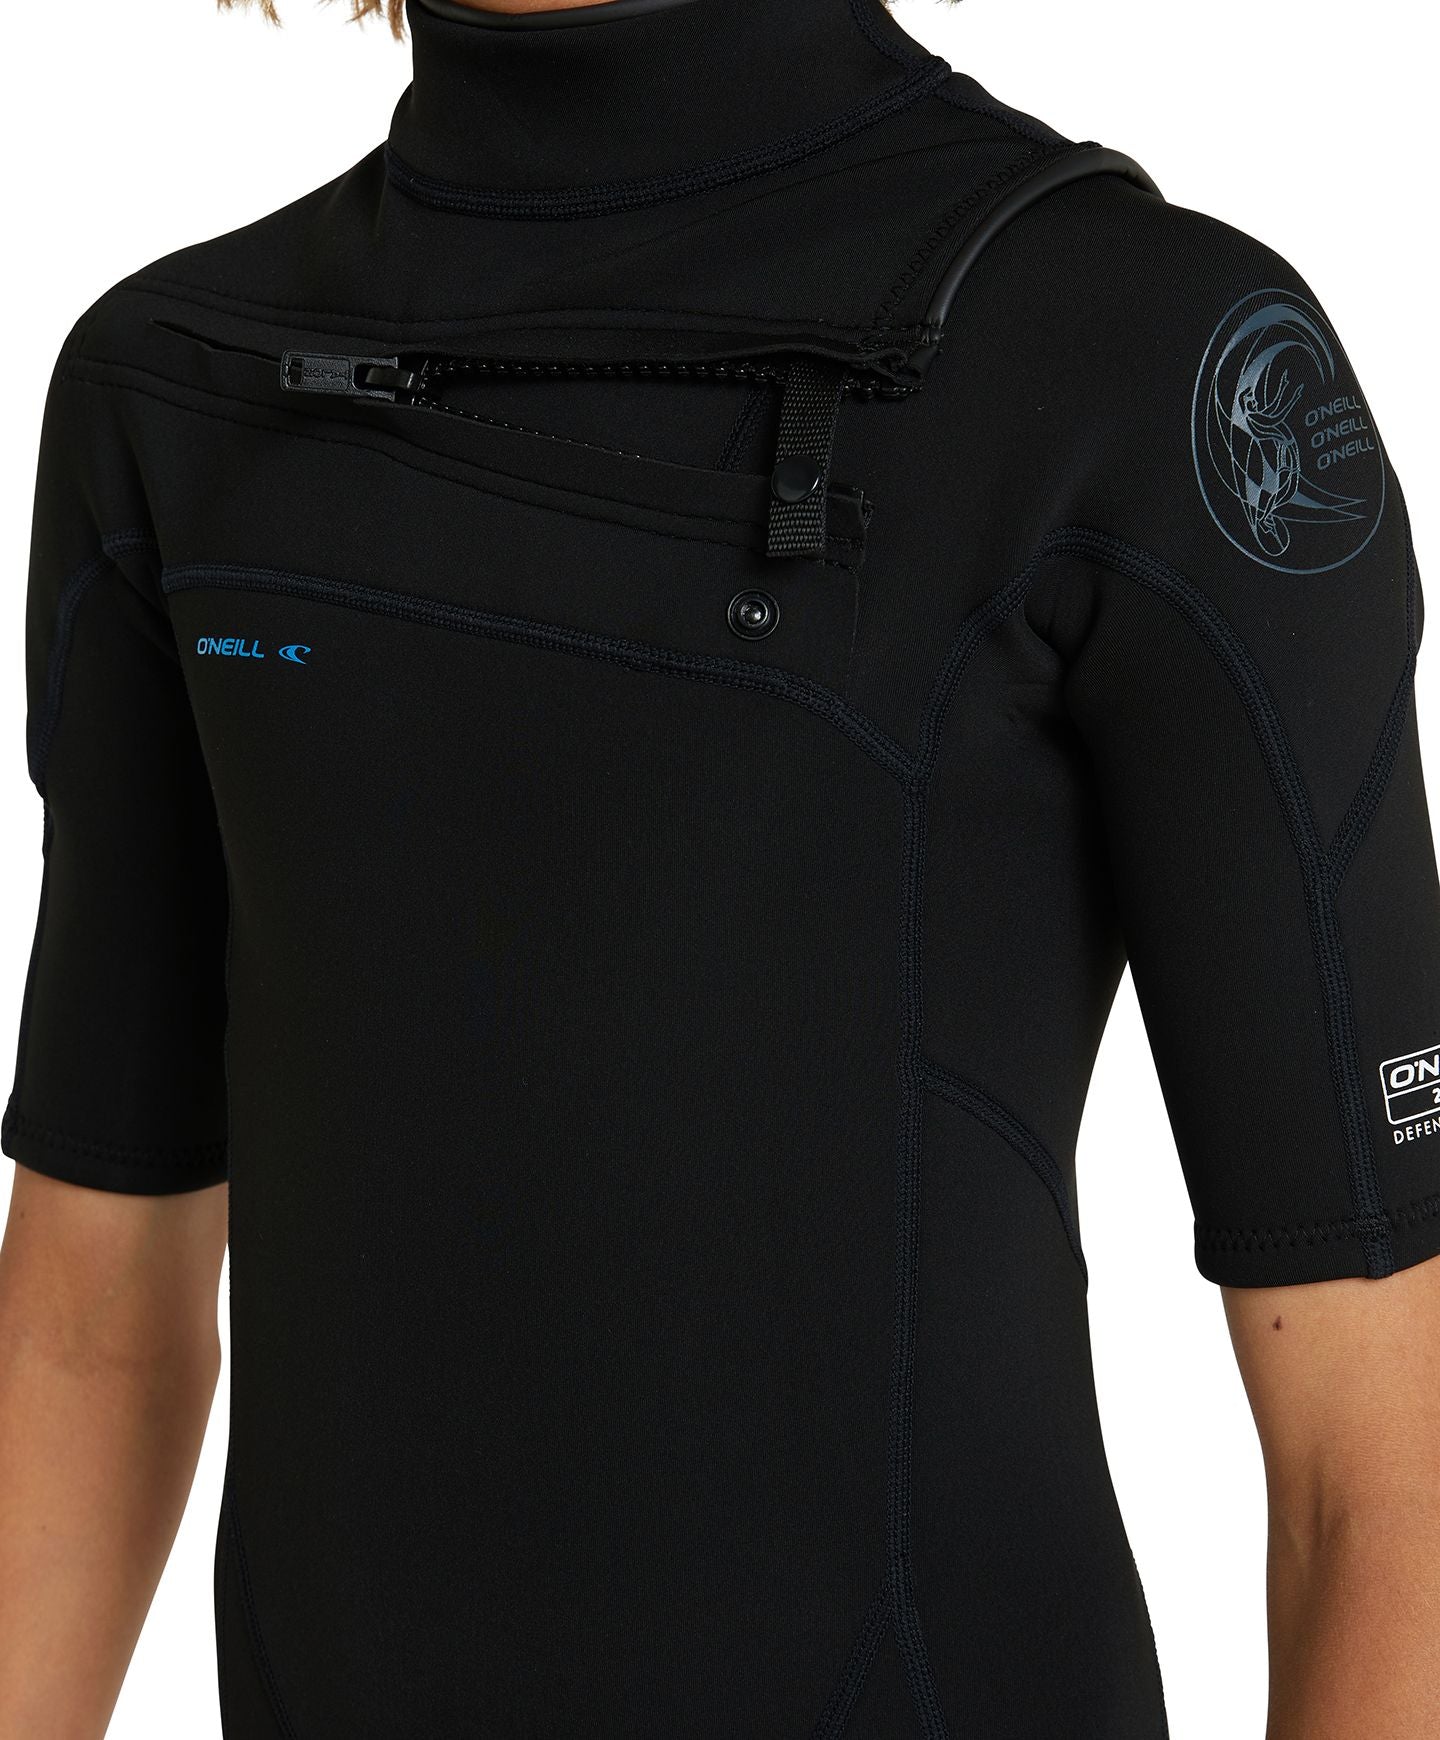 Boy's Defender 2mm Short Sleeve Spring Suit CZ Wetsuit - Black